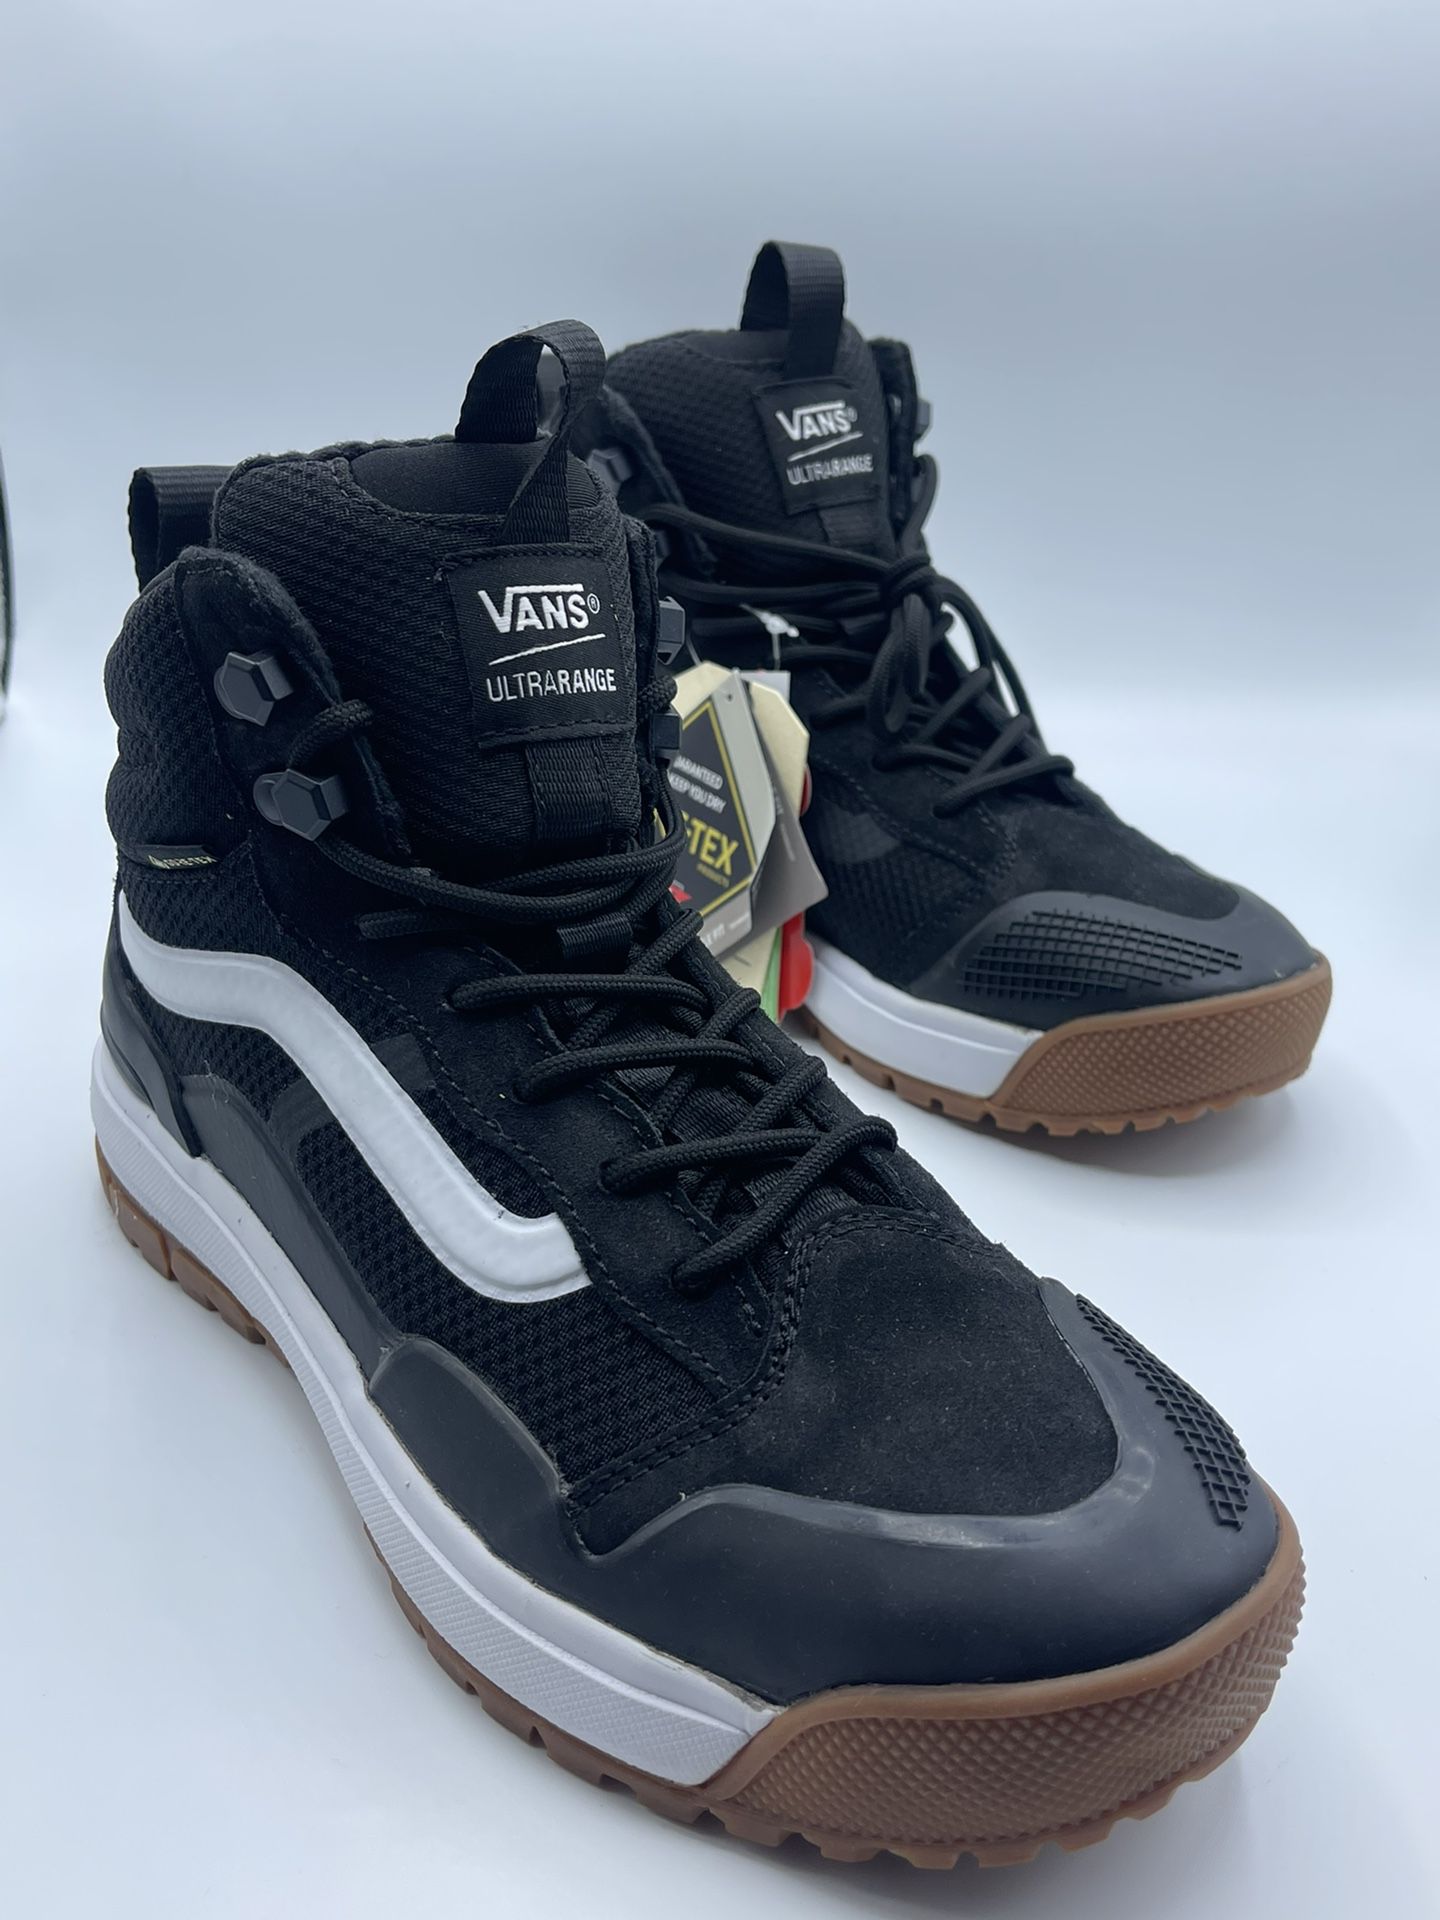 VANS Men’s UltraRange Exo Hi MTE Gore-Tex Waterproof Shoes Black Size 6.5M 8W $150